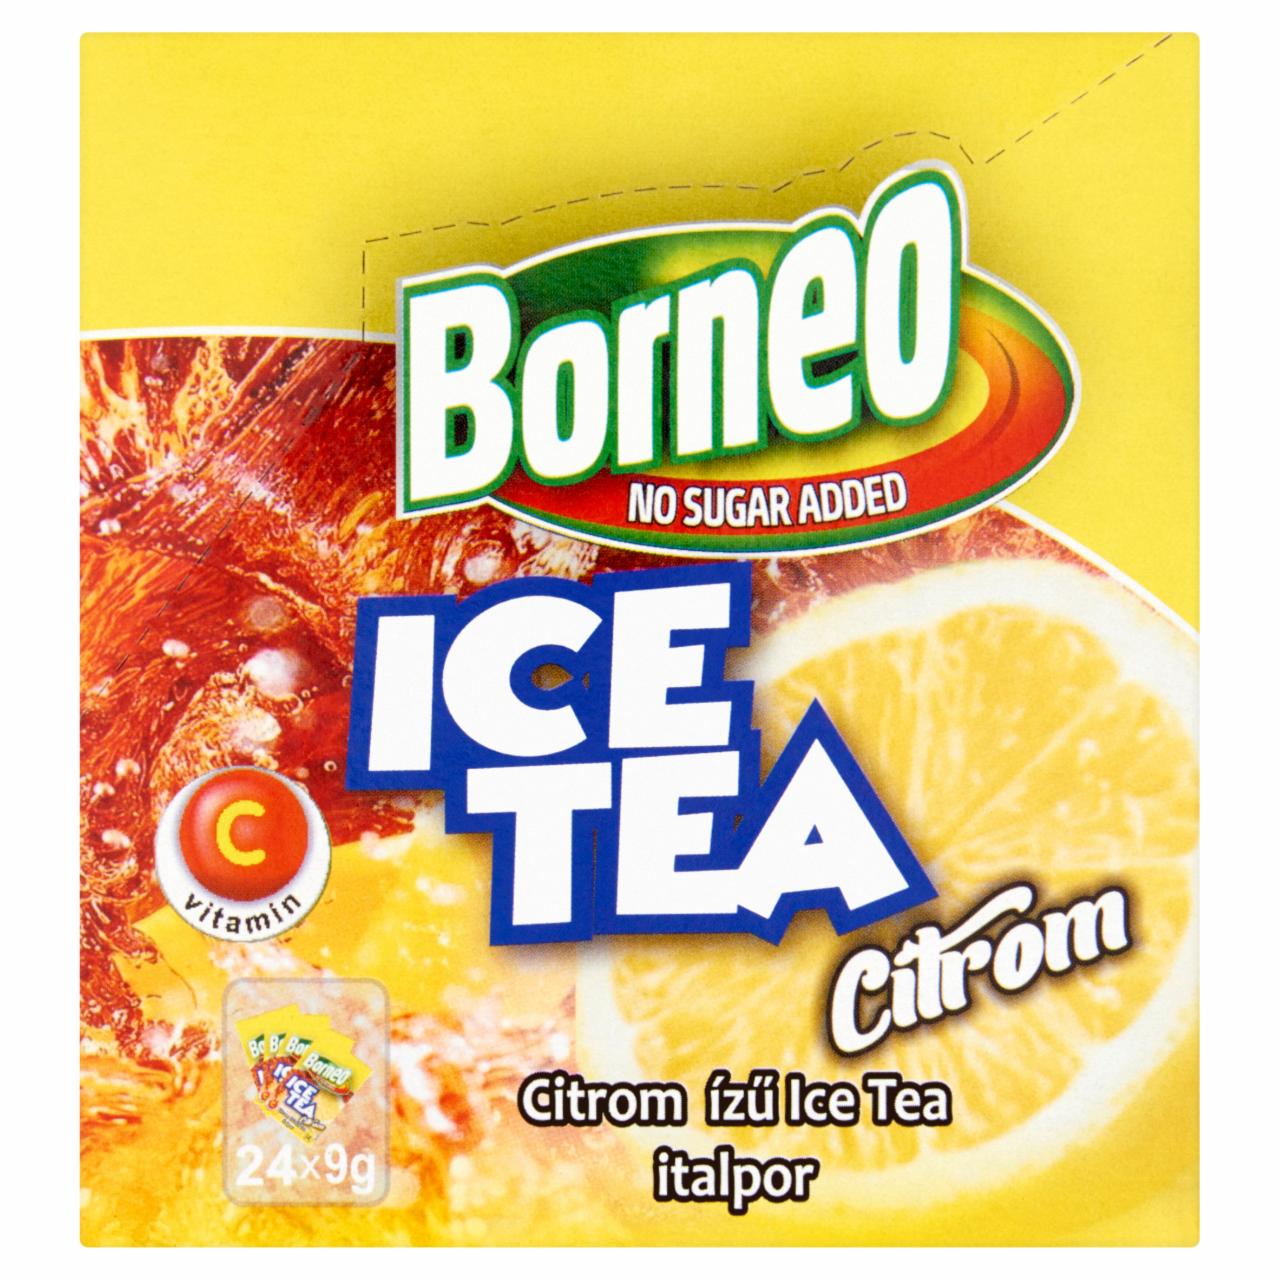 Képek - Borneo Ice Tea citrom ízű italpor 24 x 9 g